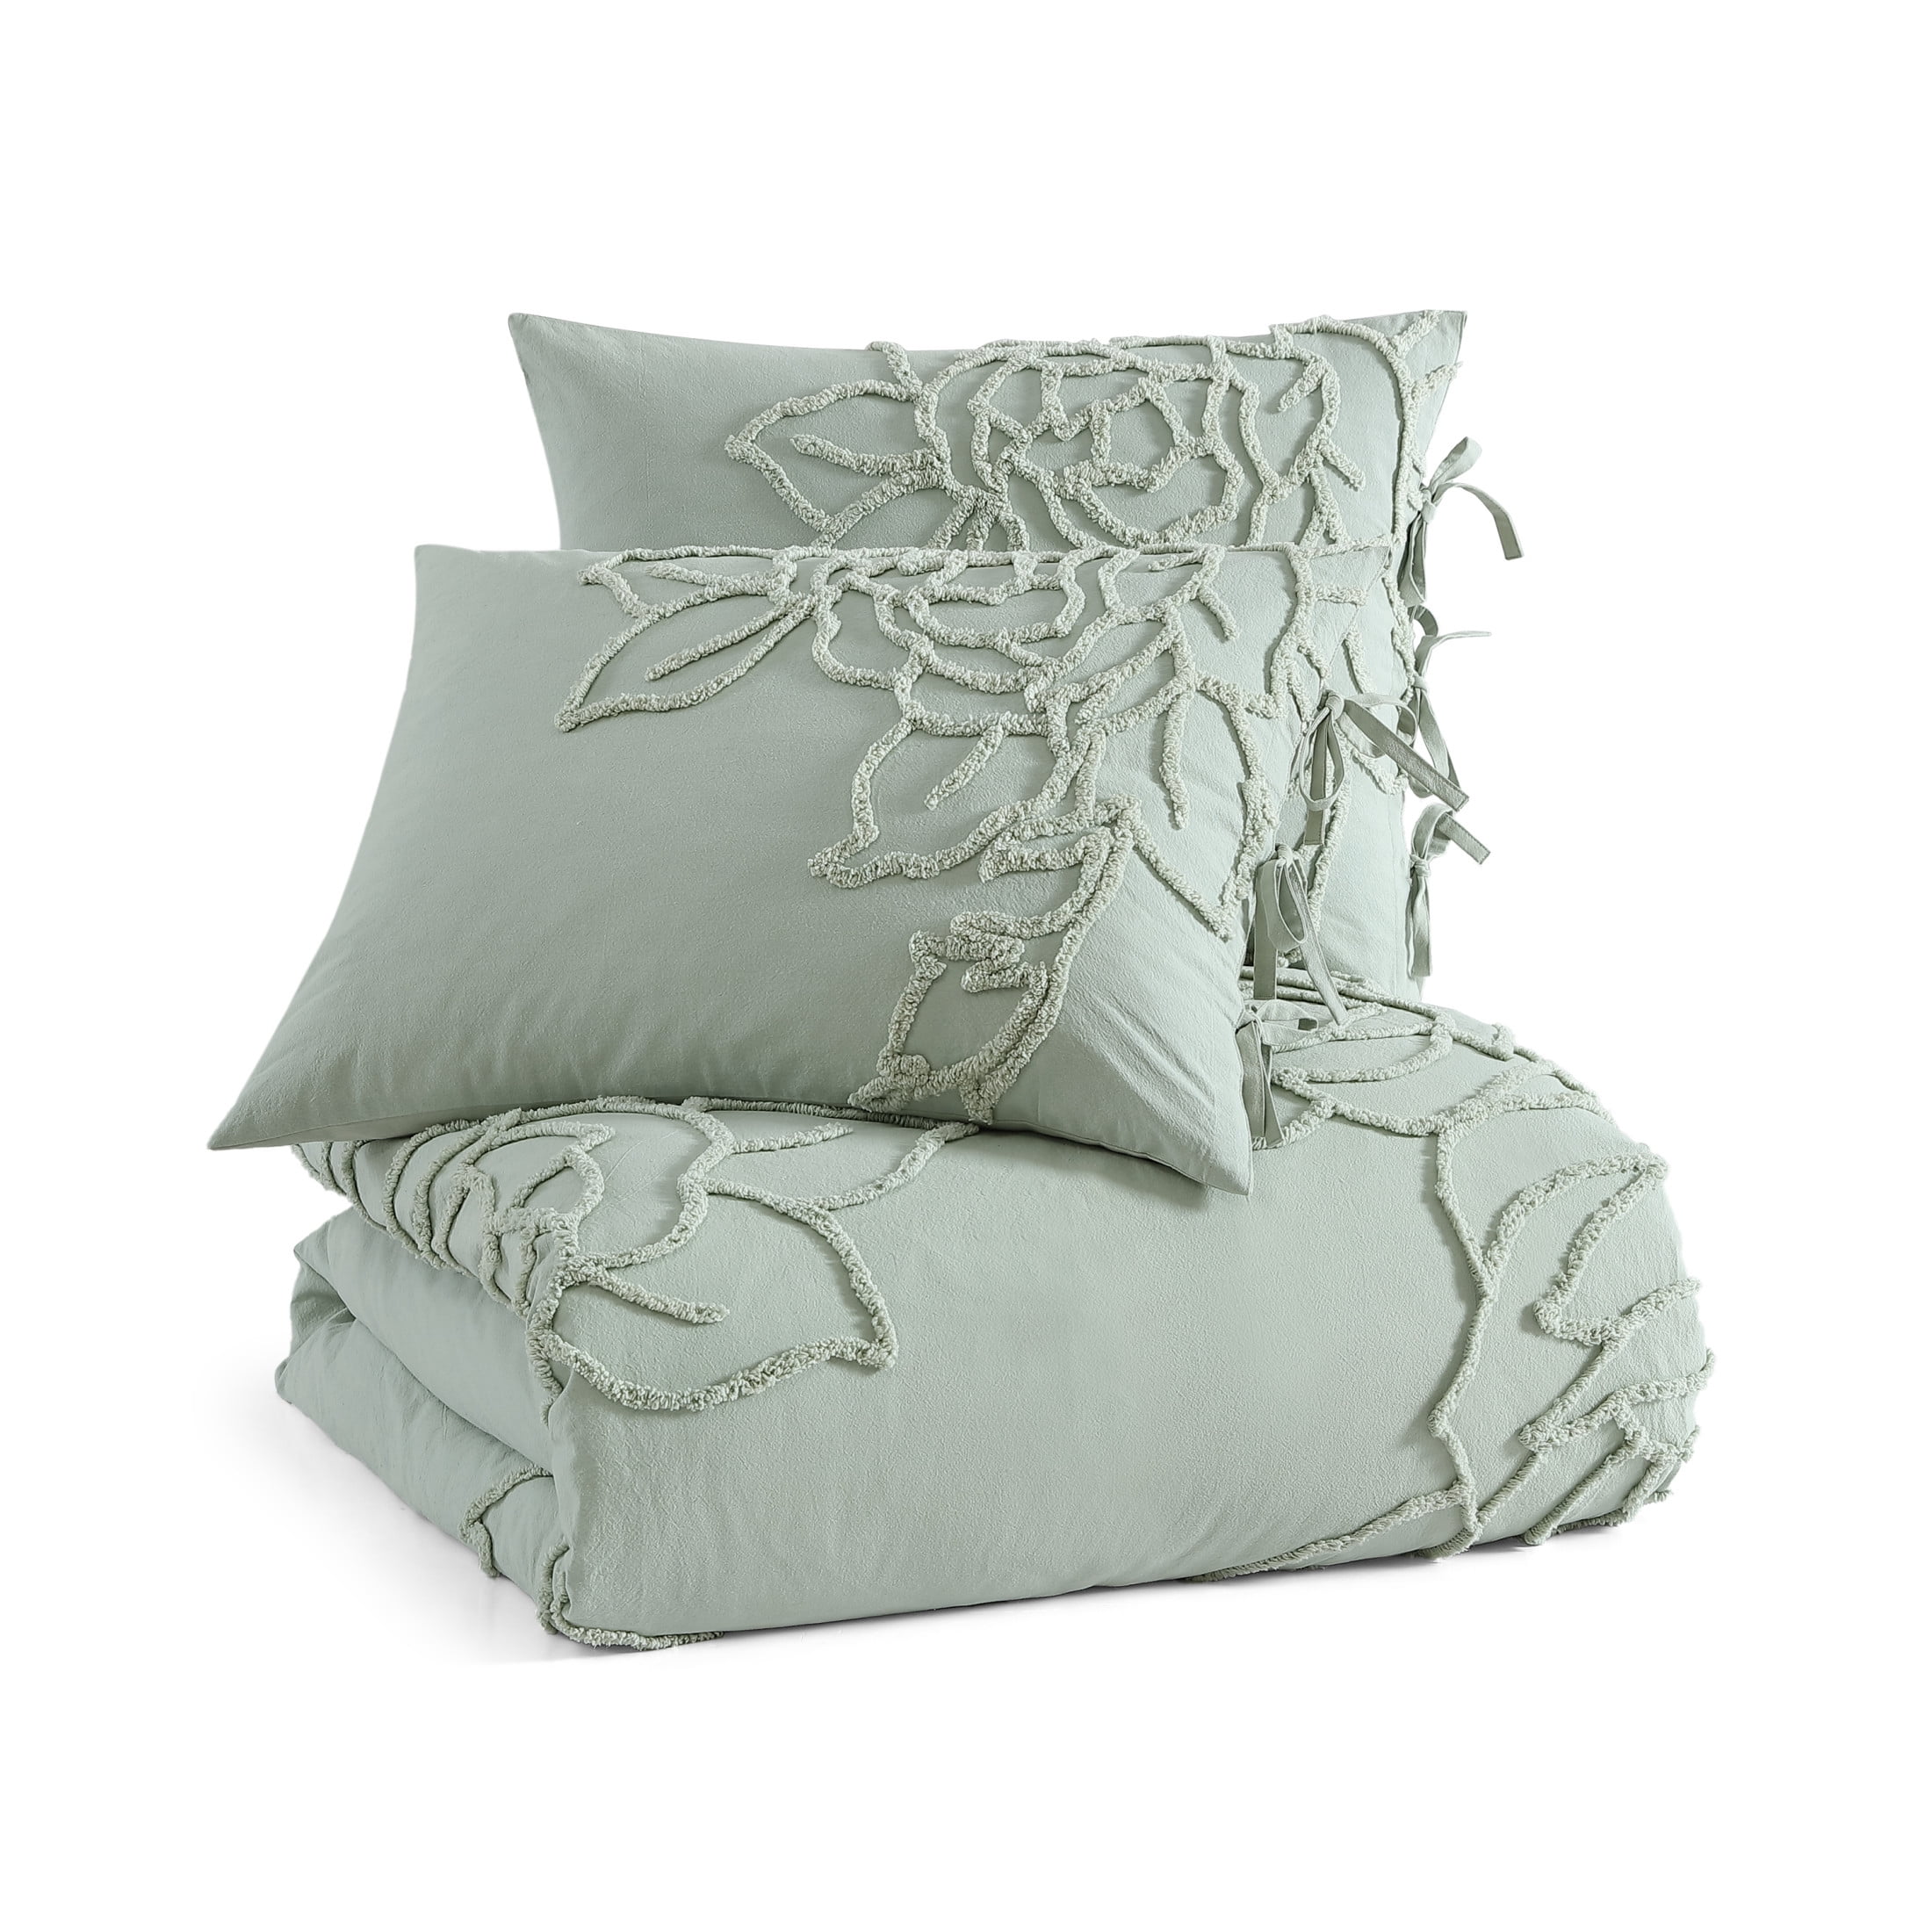 Emryn House 100% Cotton Floral Chenille Bedspread Set - Sunlight - Twin